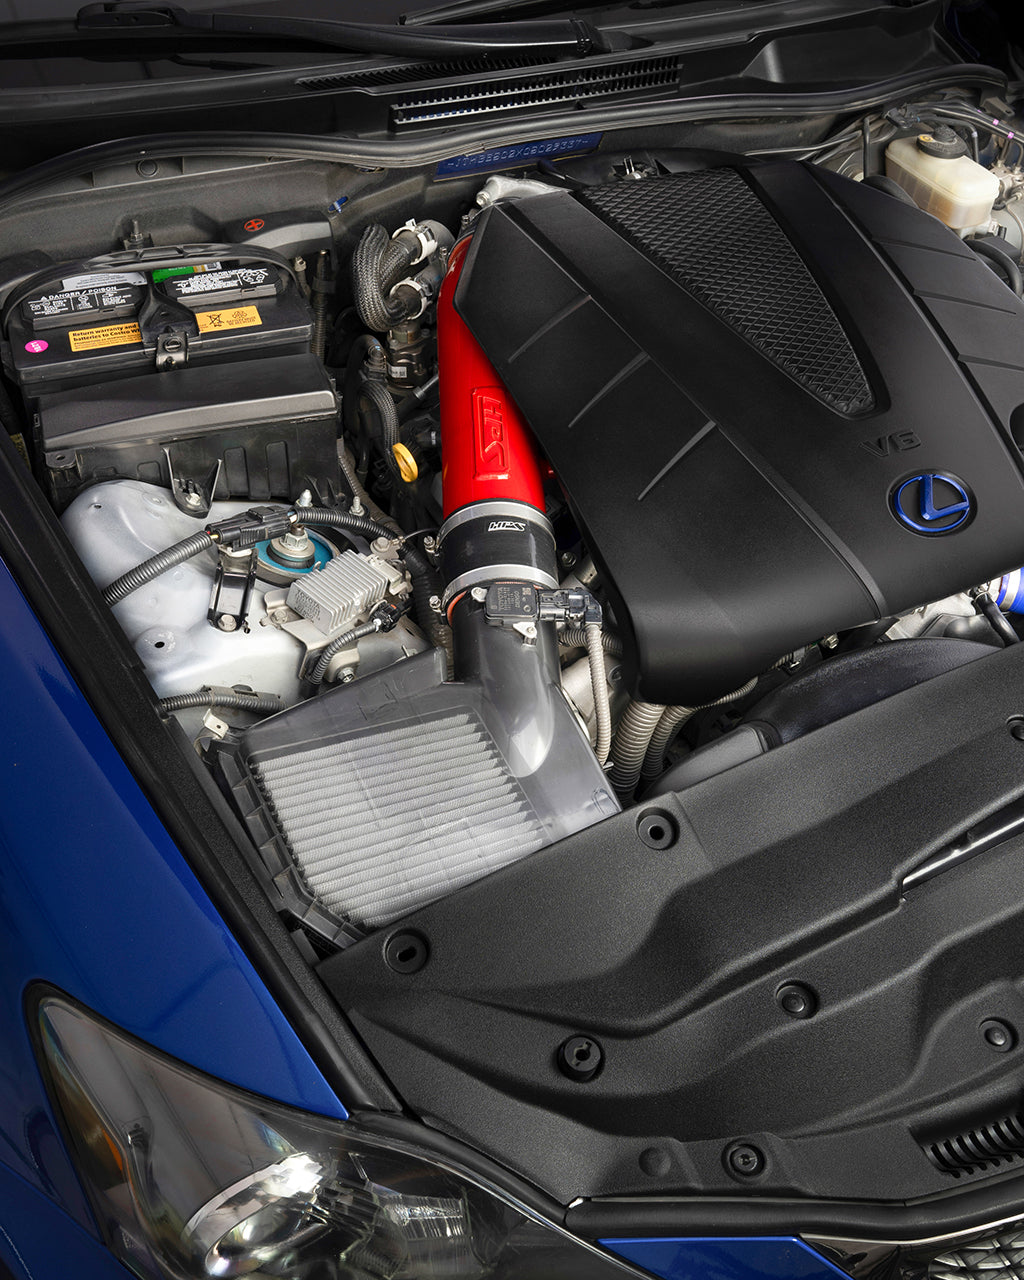 HPS Red Cold Air Intake Kit Post MAF Tube + High Flow Filter Installed 2006-2013 Lexus IS350 3.5L V6 827-710R